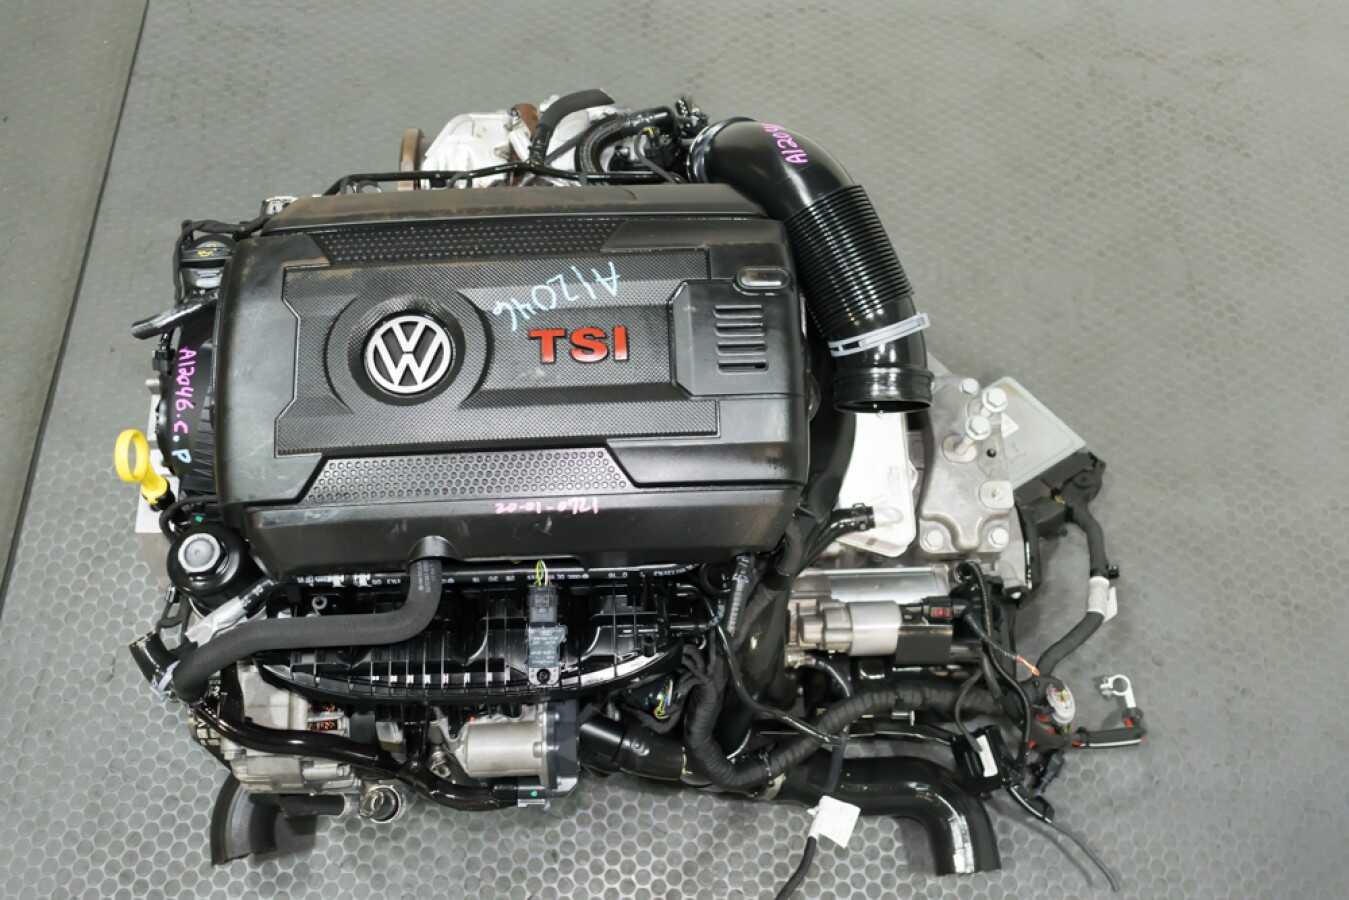 Volkswagen TSI 2.0L engine